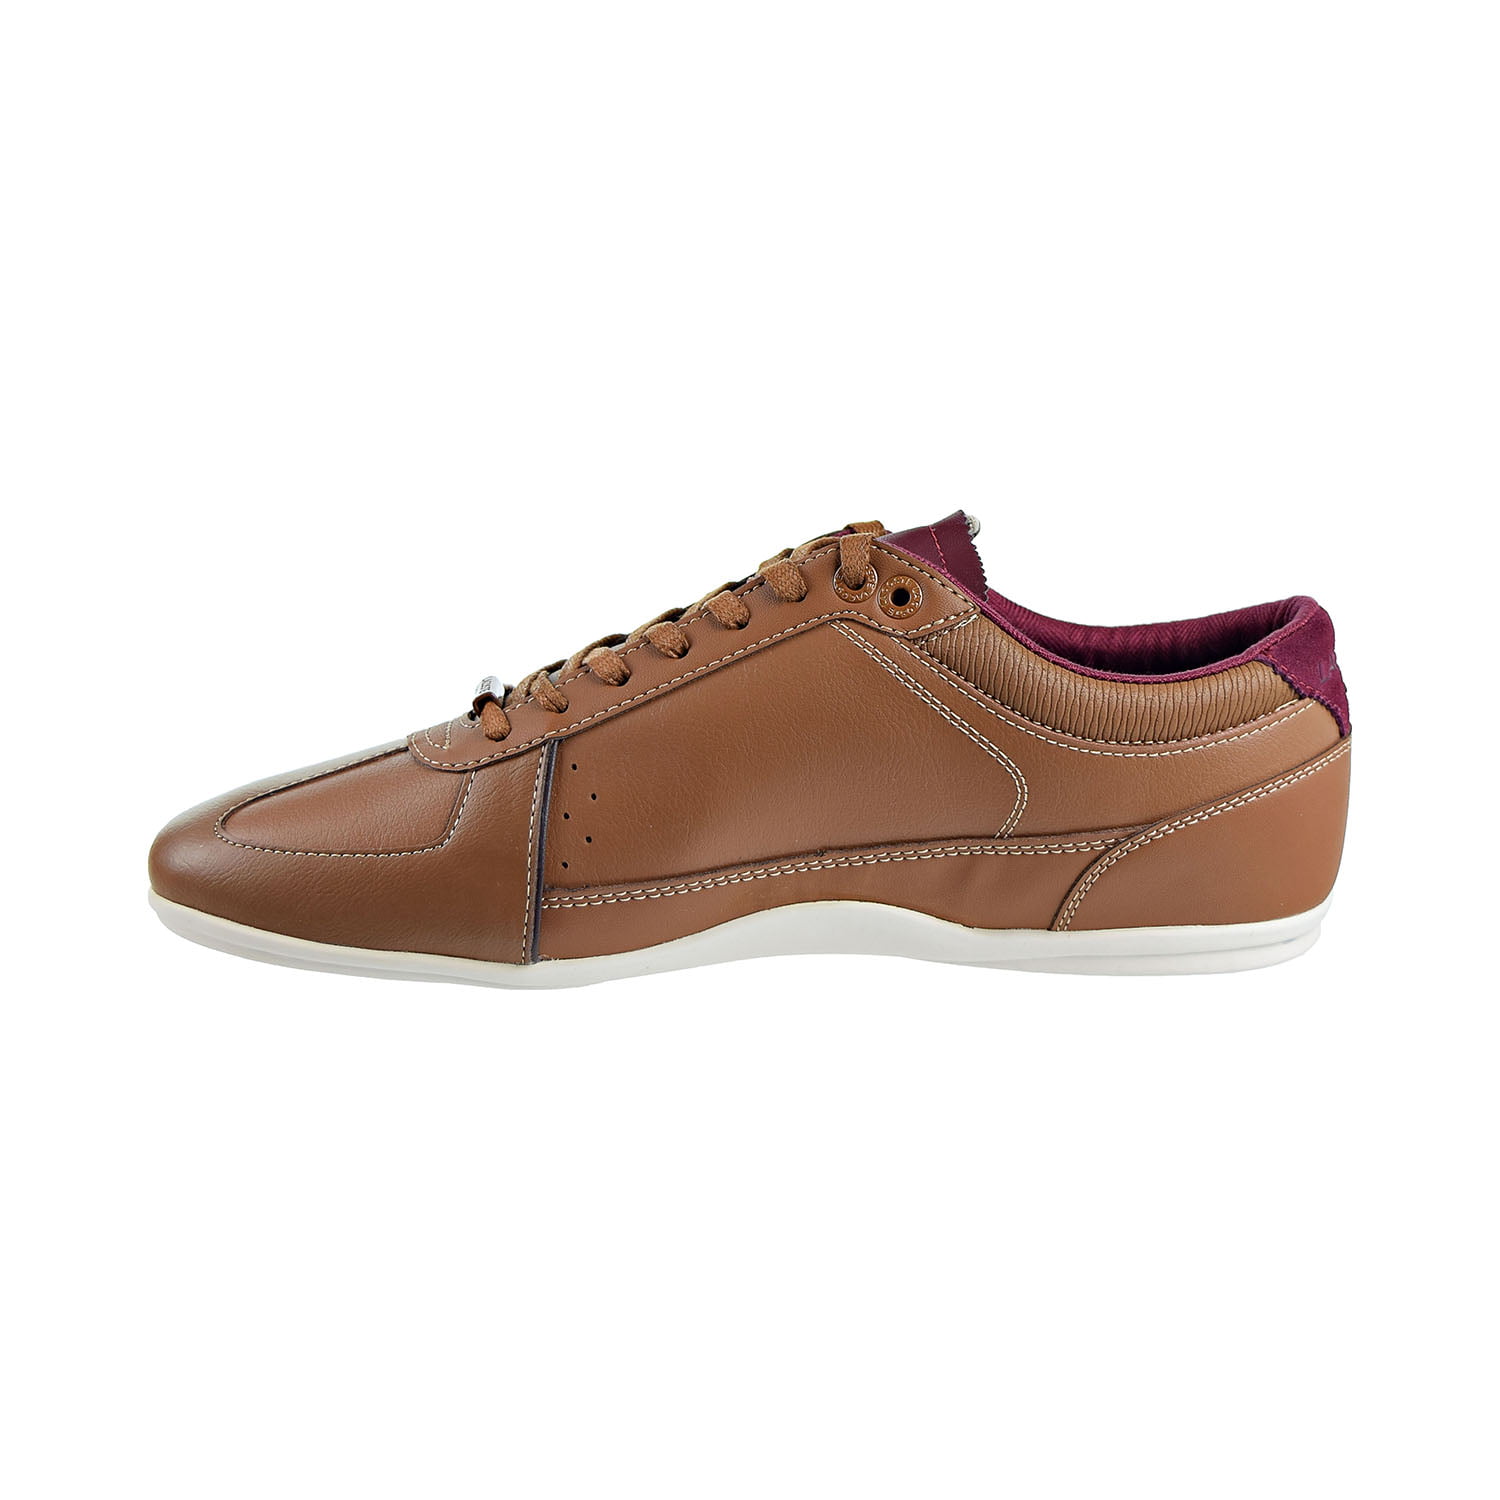 Lacoste Evara 318 2 Cam Men's Shoes Brown/Dark Red 7-36cam0024-br1